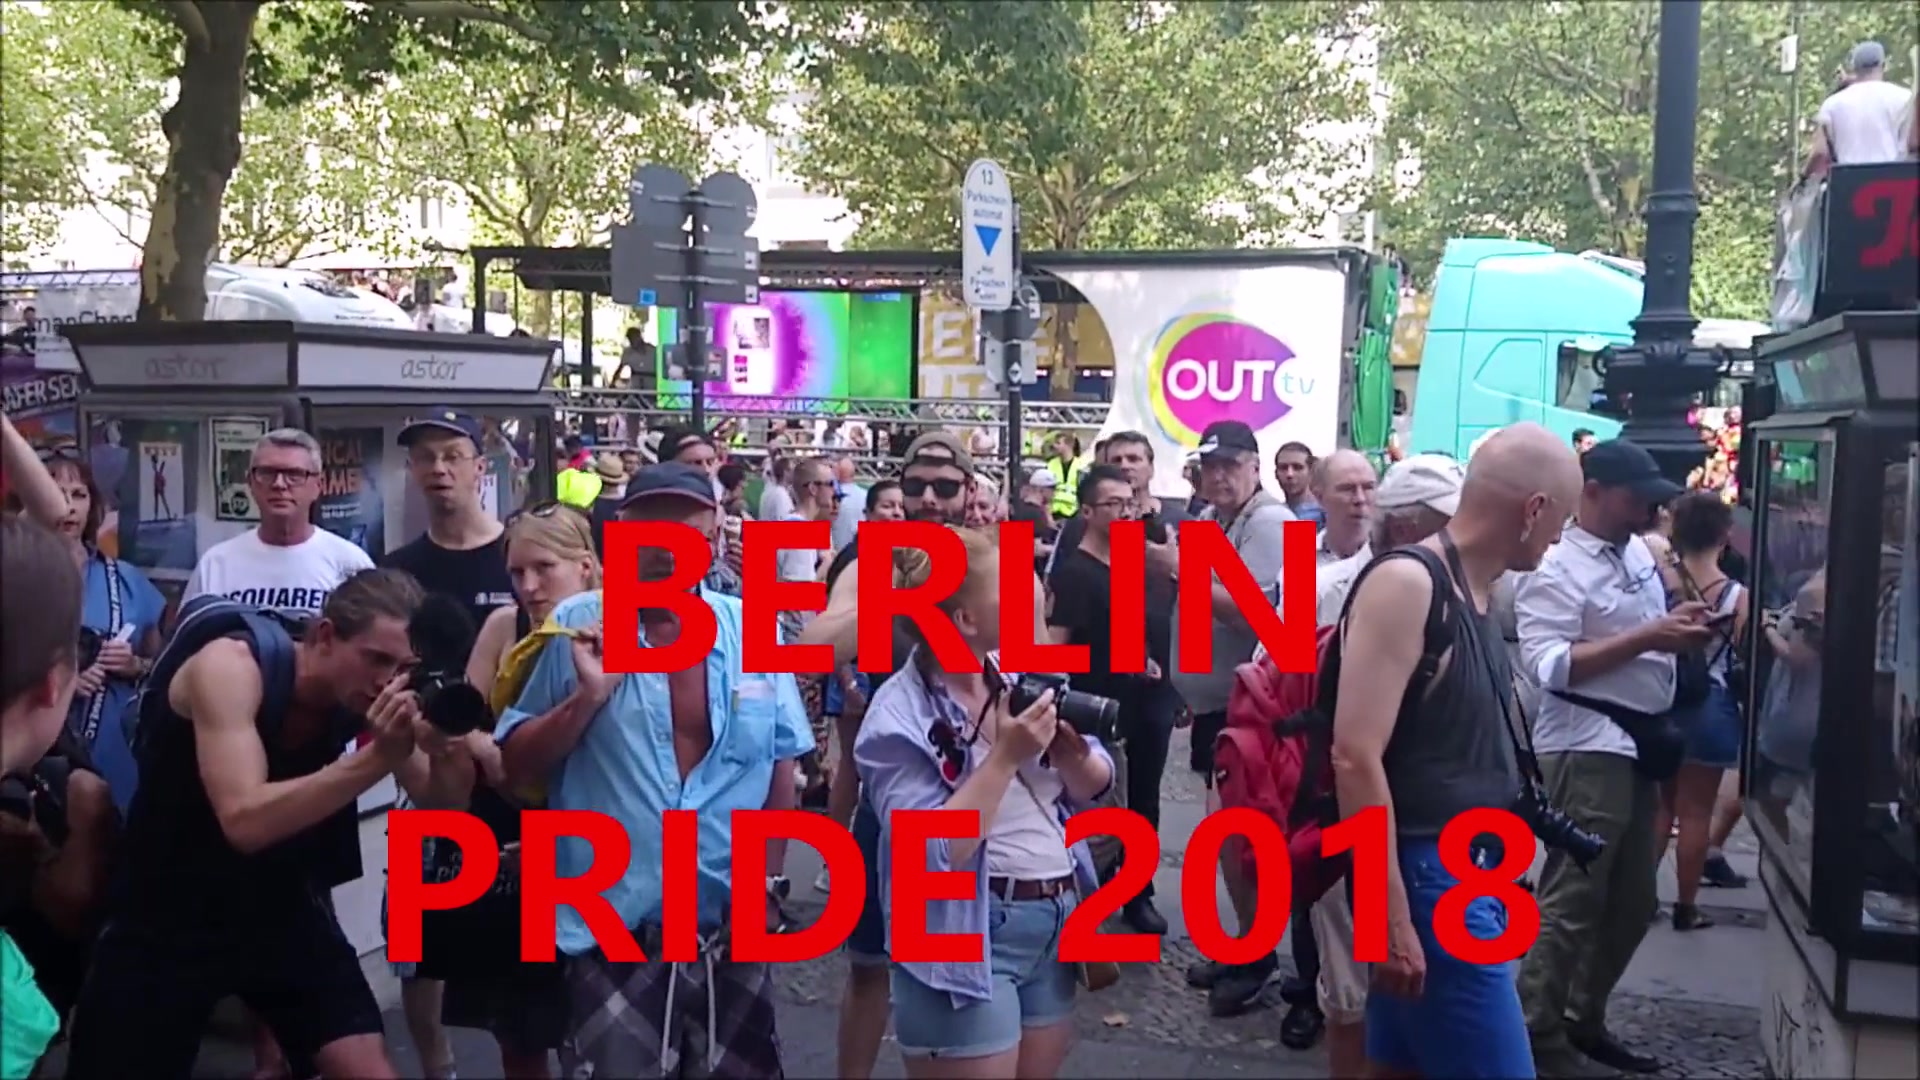 BERLIN PRIDE 2018 WITH NAKED MEN